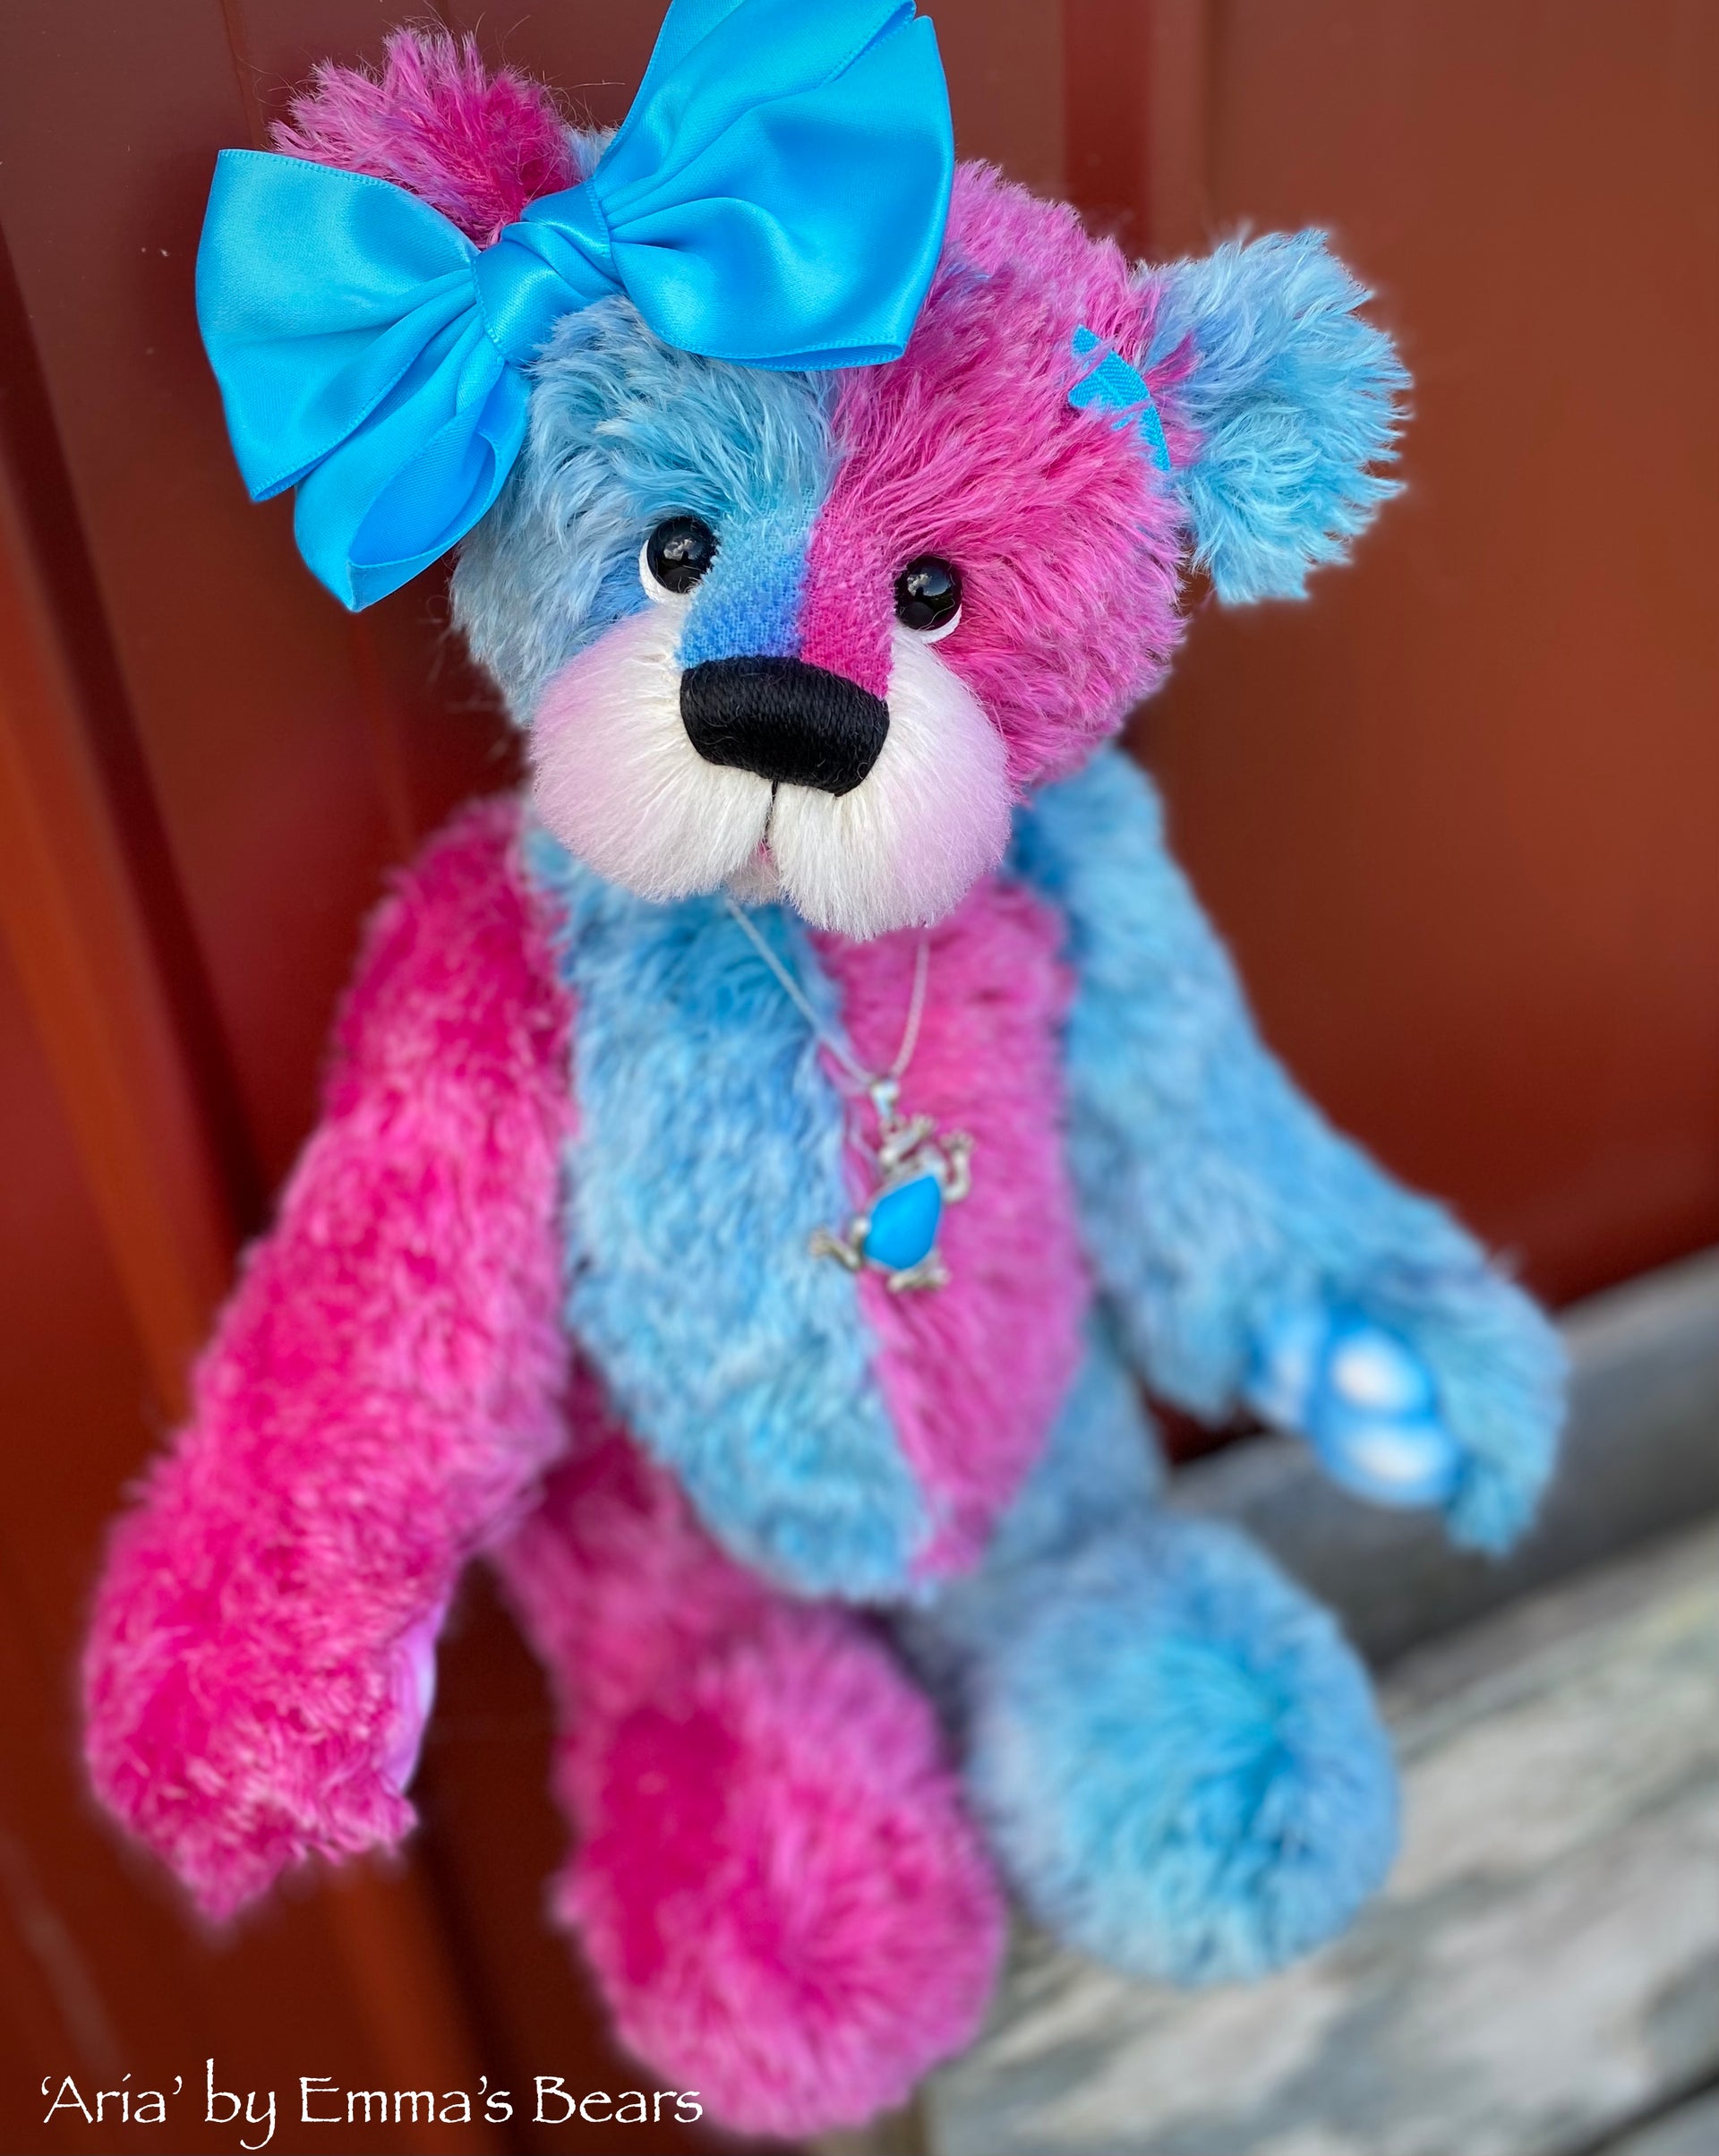 Aria - 13" Hand-dyed string mohair artist bear by Emma's Bears - OOAK